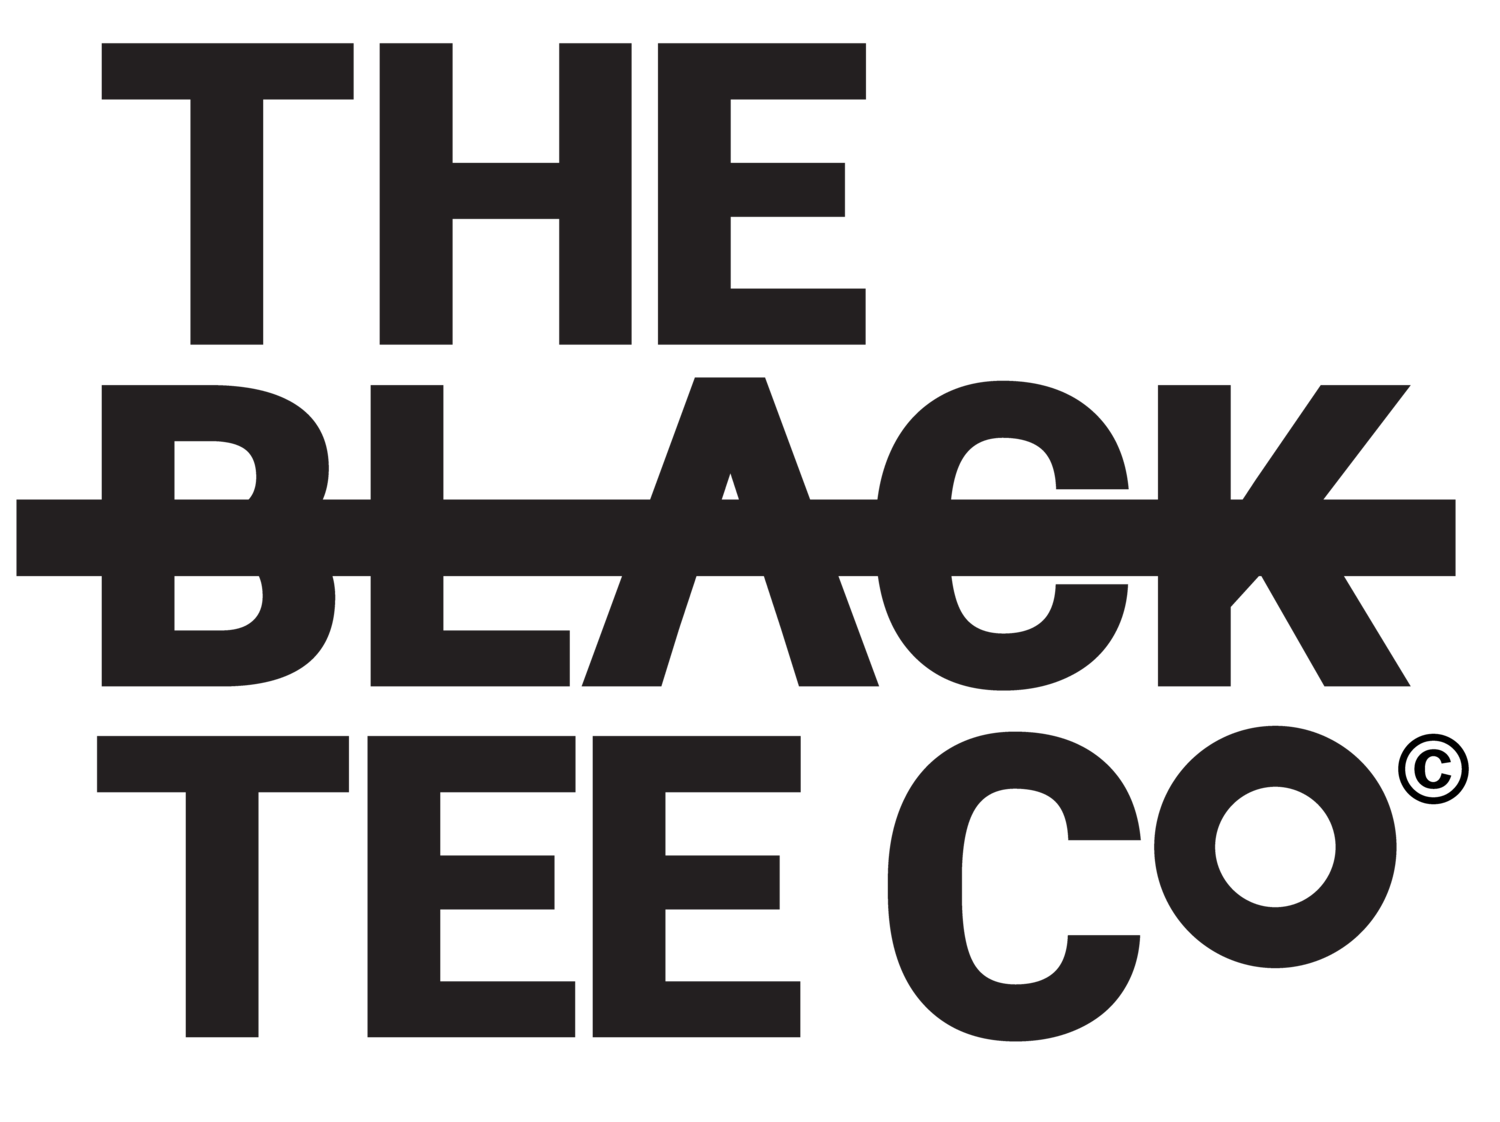 The Black Tee Company